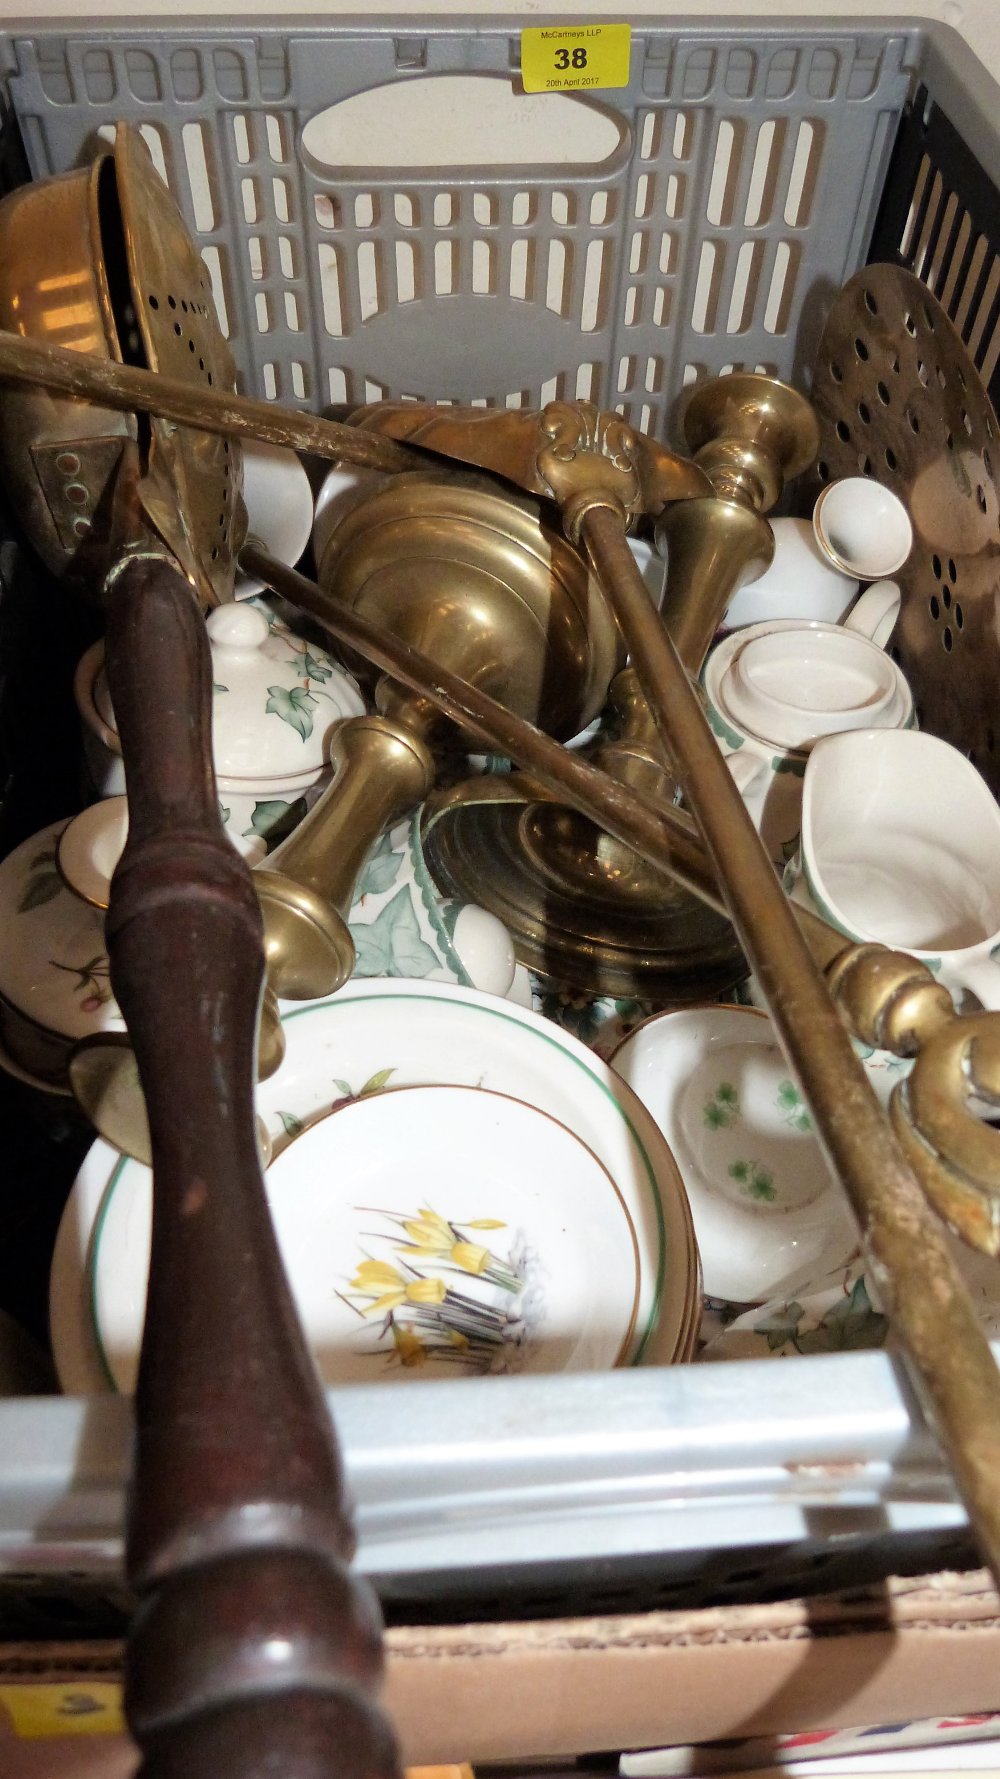 Teaware and brassware